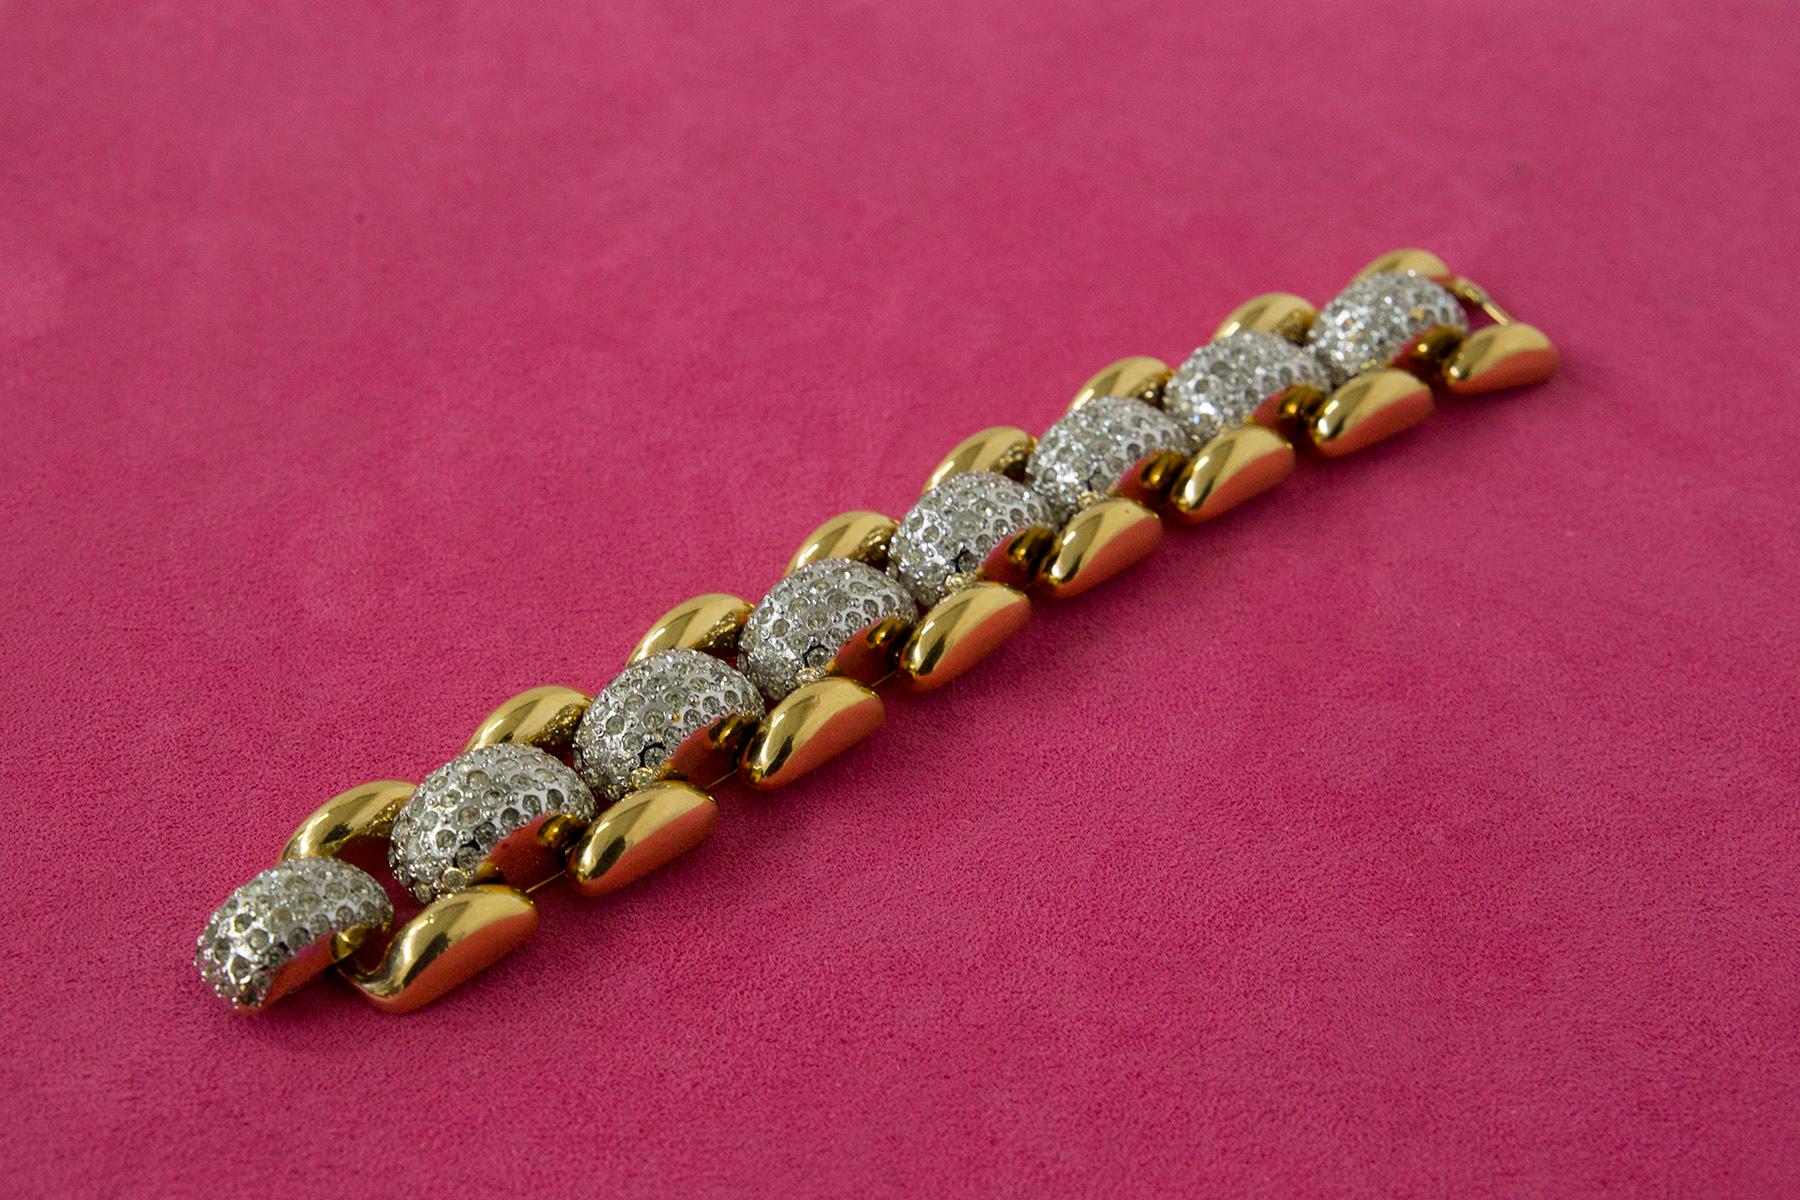 Vintage Yves Saint Laurent bracelet in gold-plated metal 3